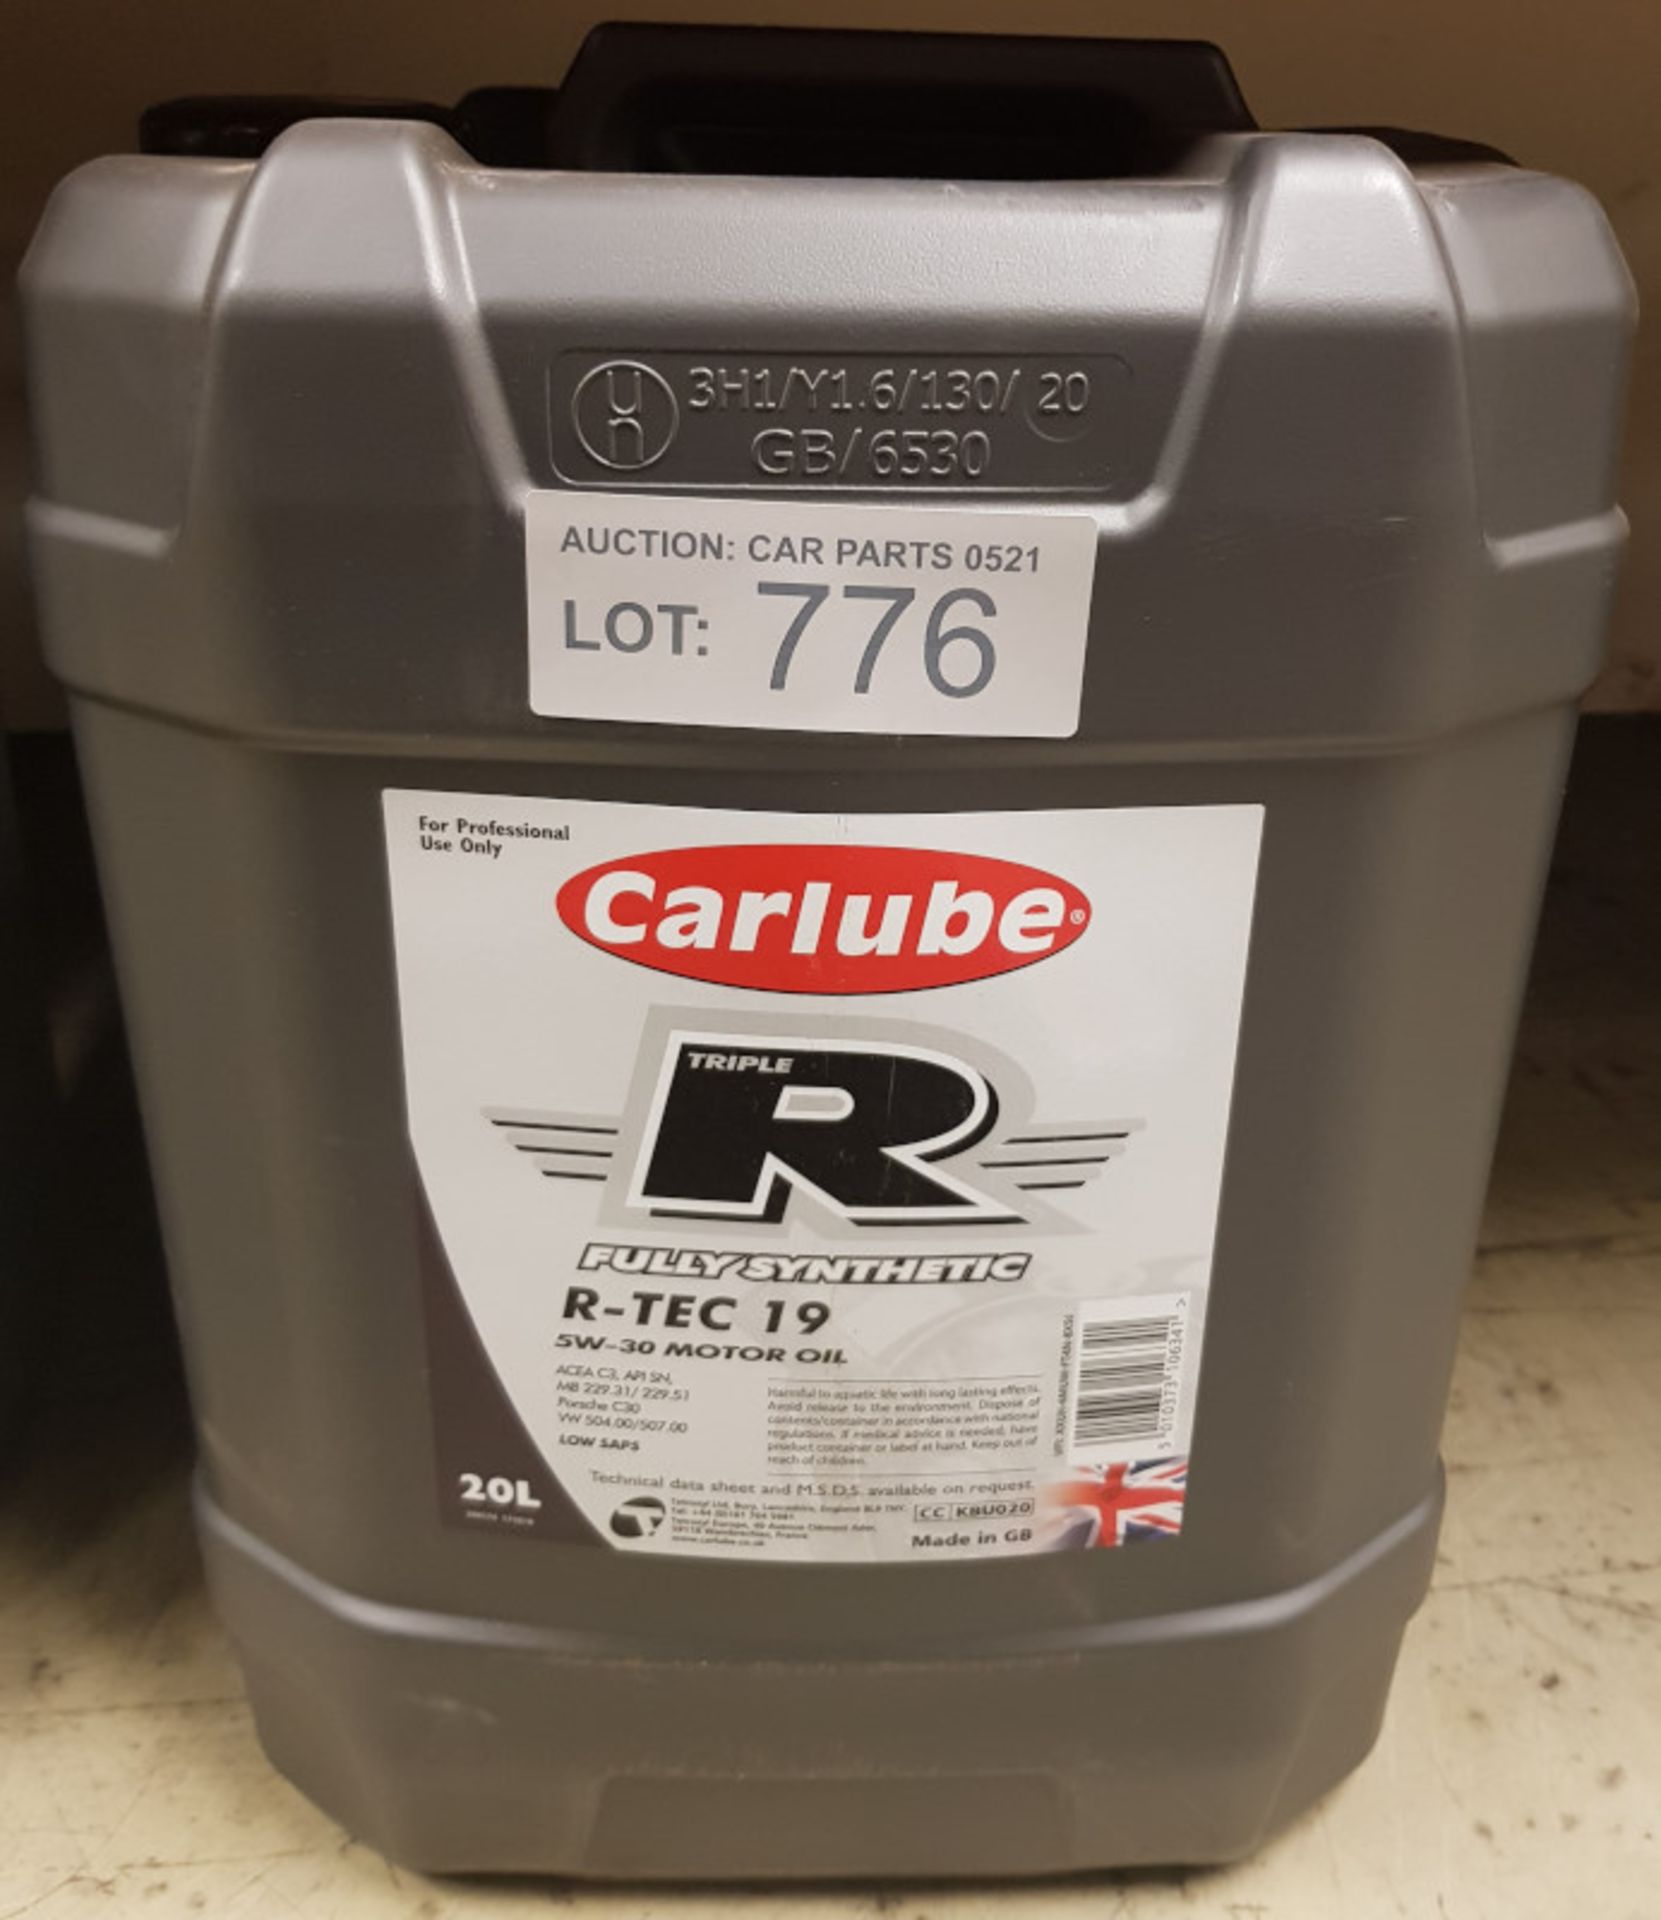 Carlube Fully Synthetic R-Tec 19 - 5W-30 Motor Oil - 20L